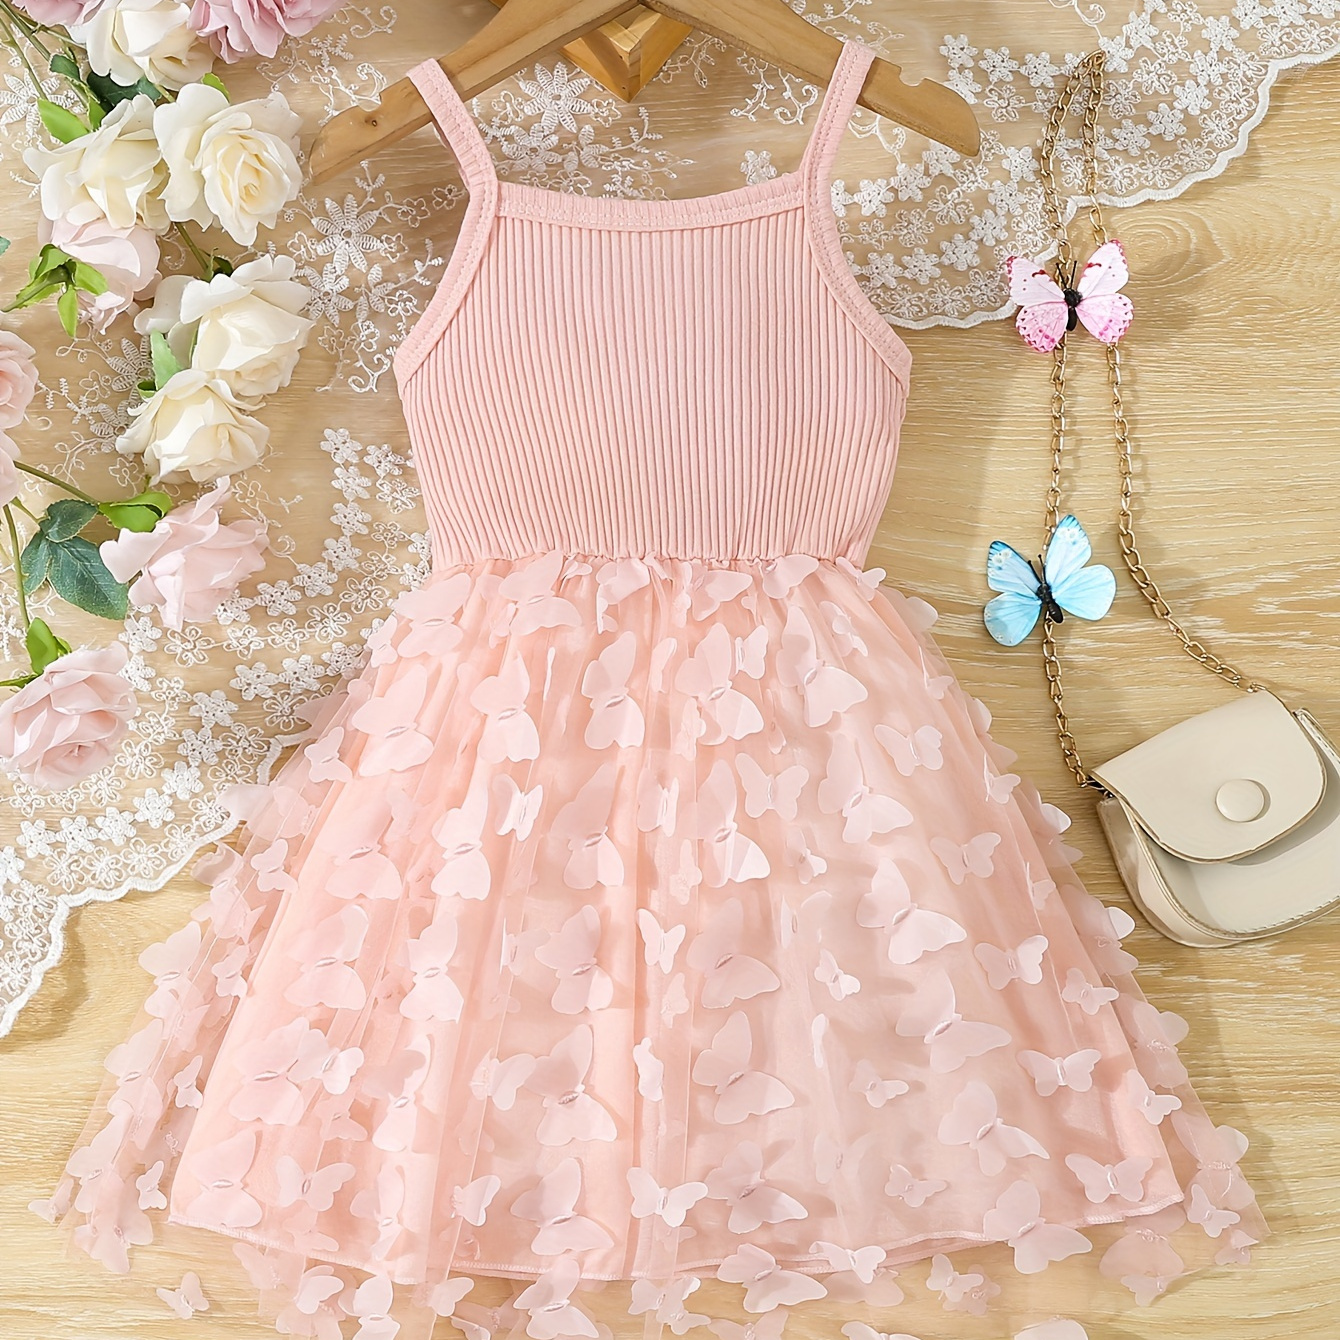 

Baby's Butterfly Decor Mesh Splicing Cami Dress, Elegant Sleeveless Princess Dress, Infant & Toddler Girl's Clothing For Summer/spring, As Gift